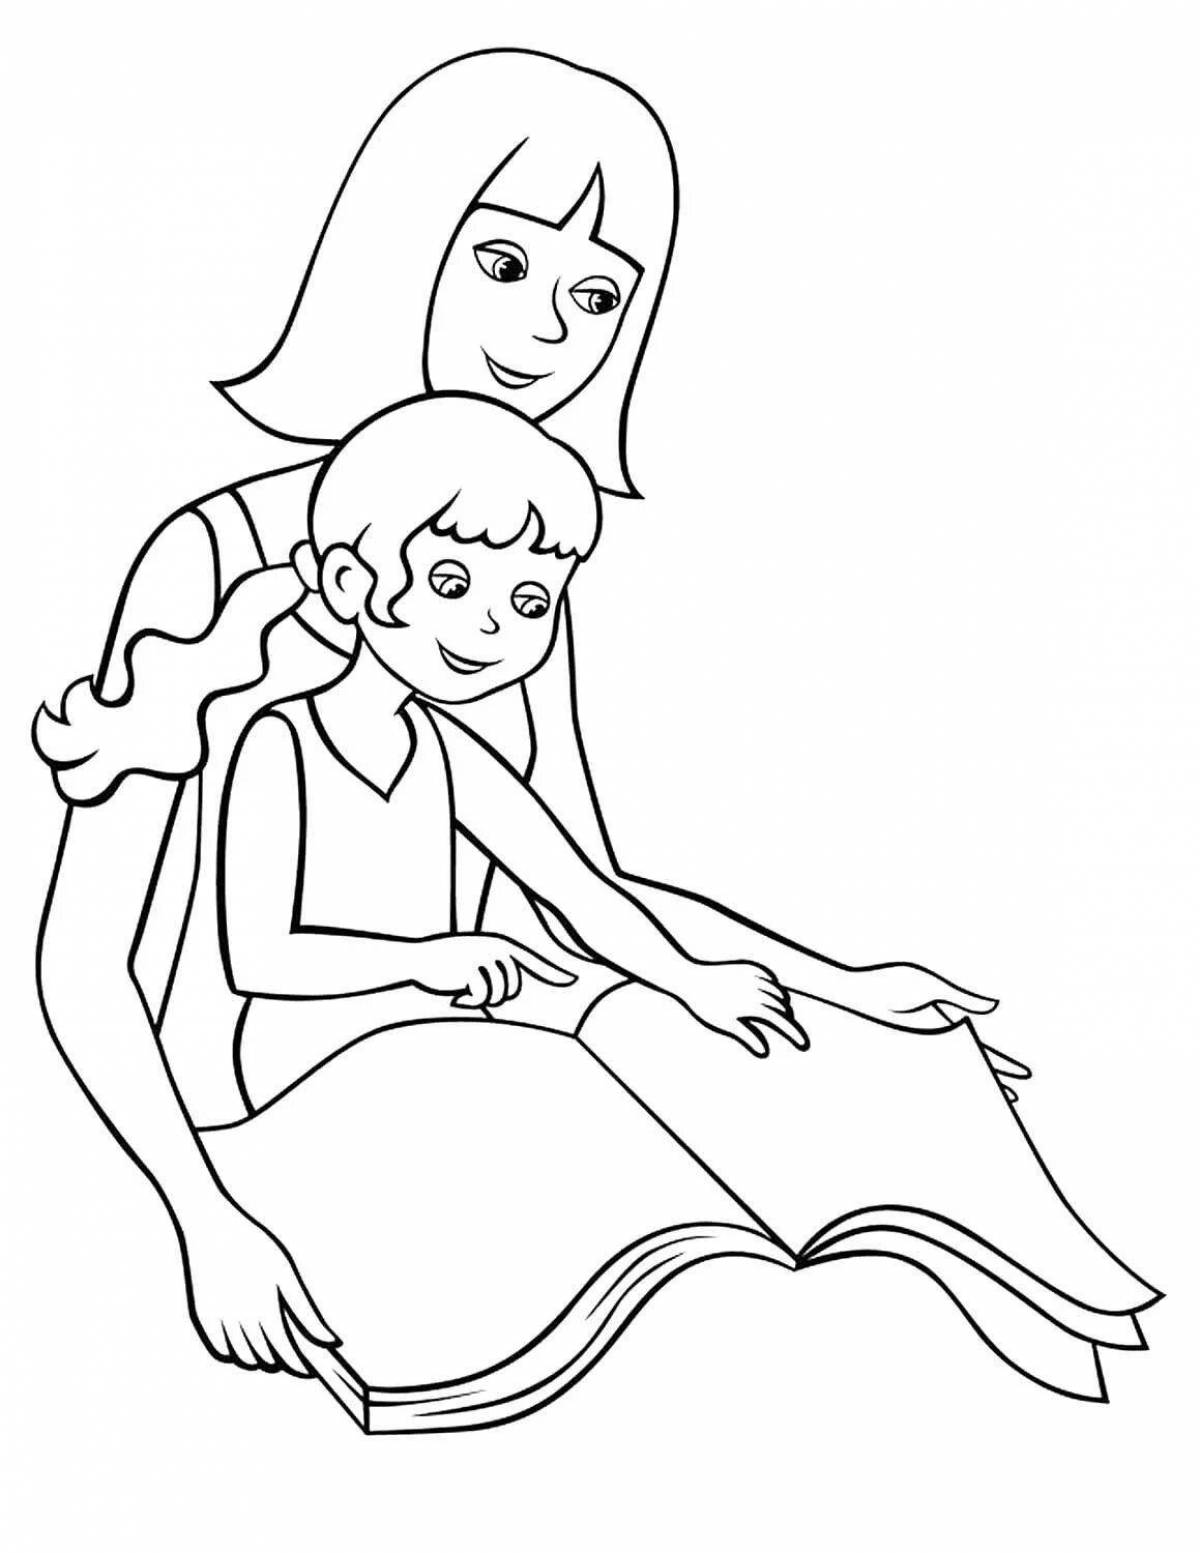 Картинки Мама и ребенок (128 фото и рисунков)